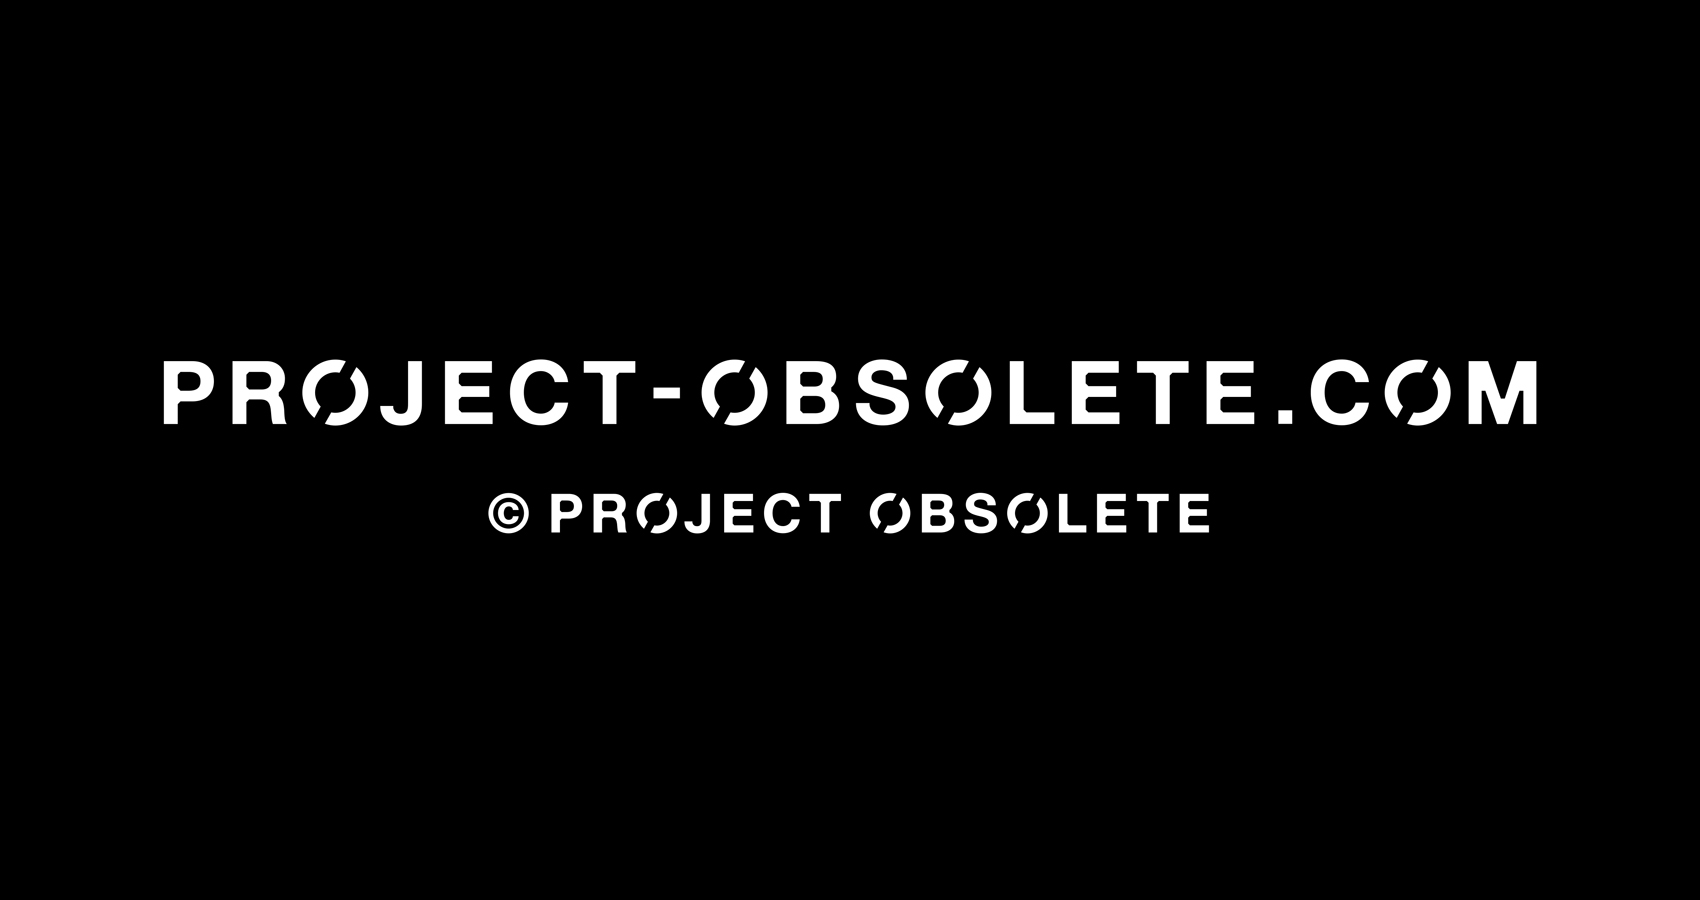 OBS_Logo/Typeface